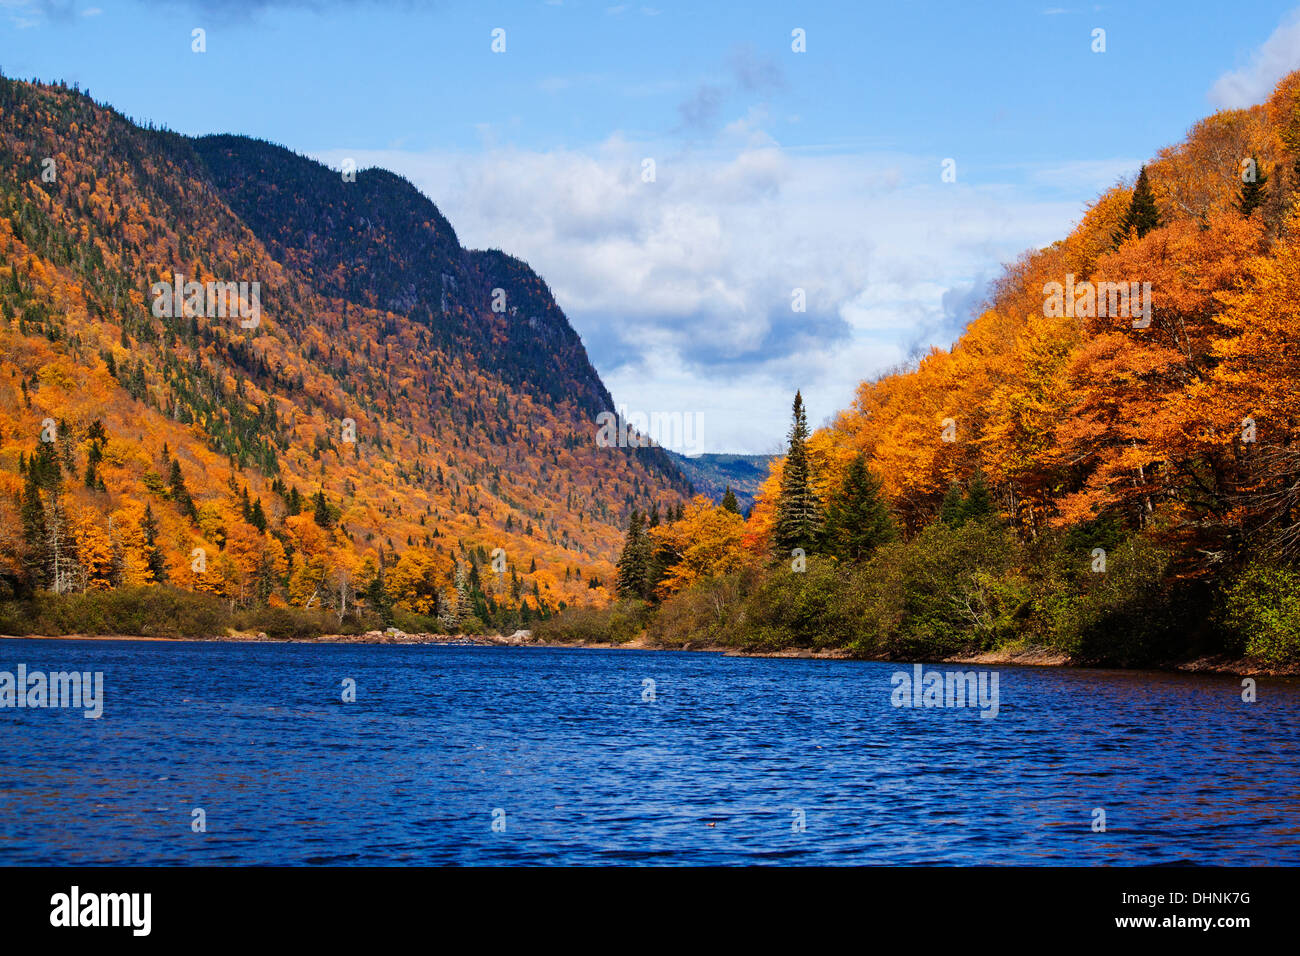 Canadian autumn landscape with 